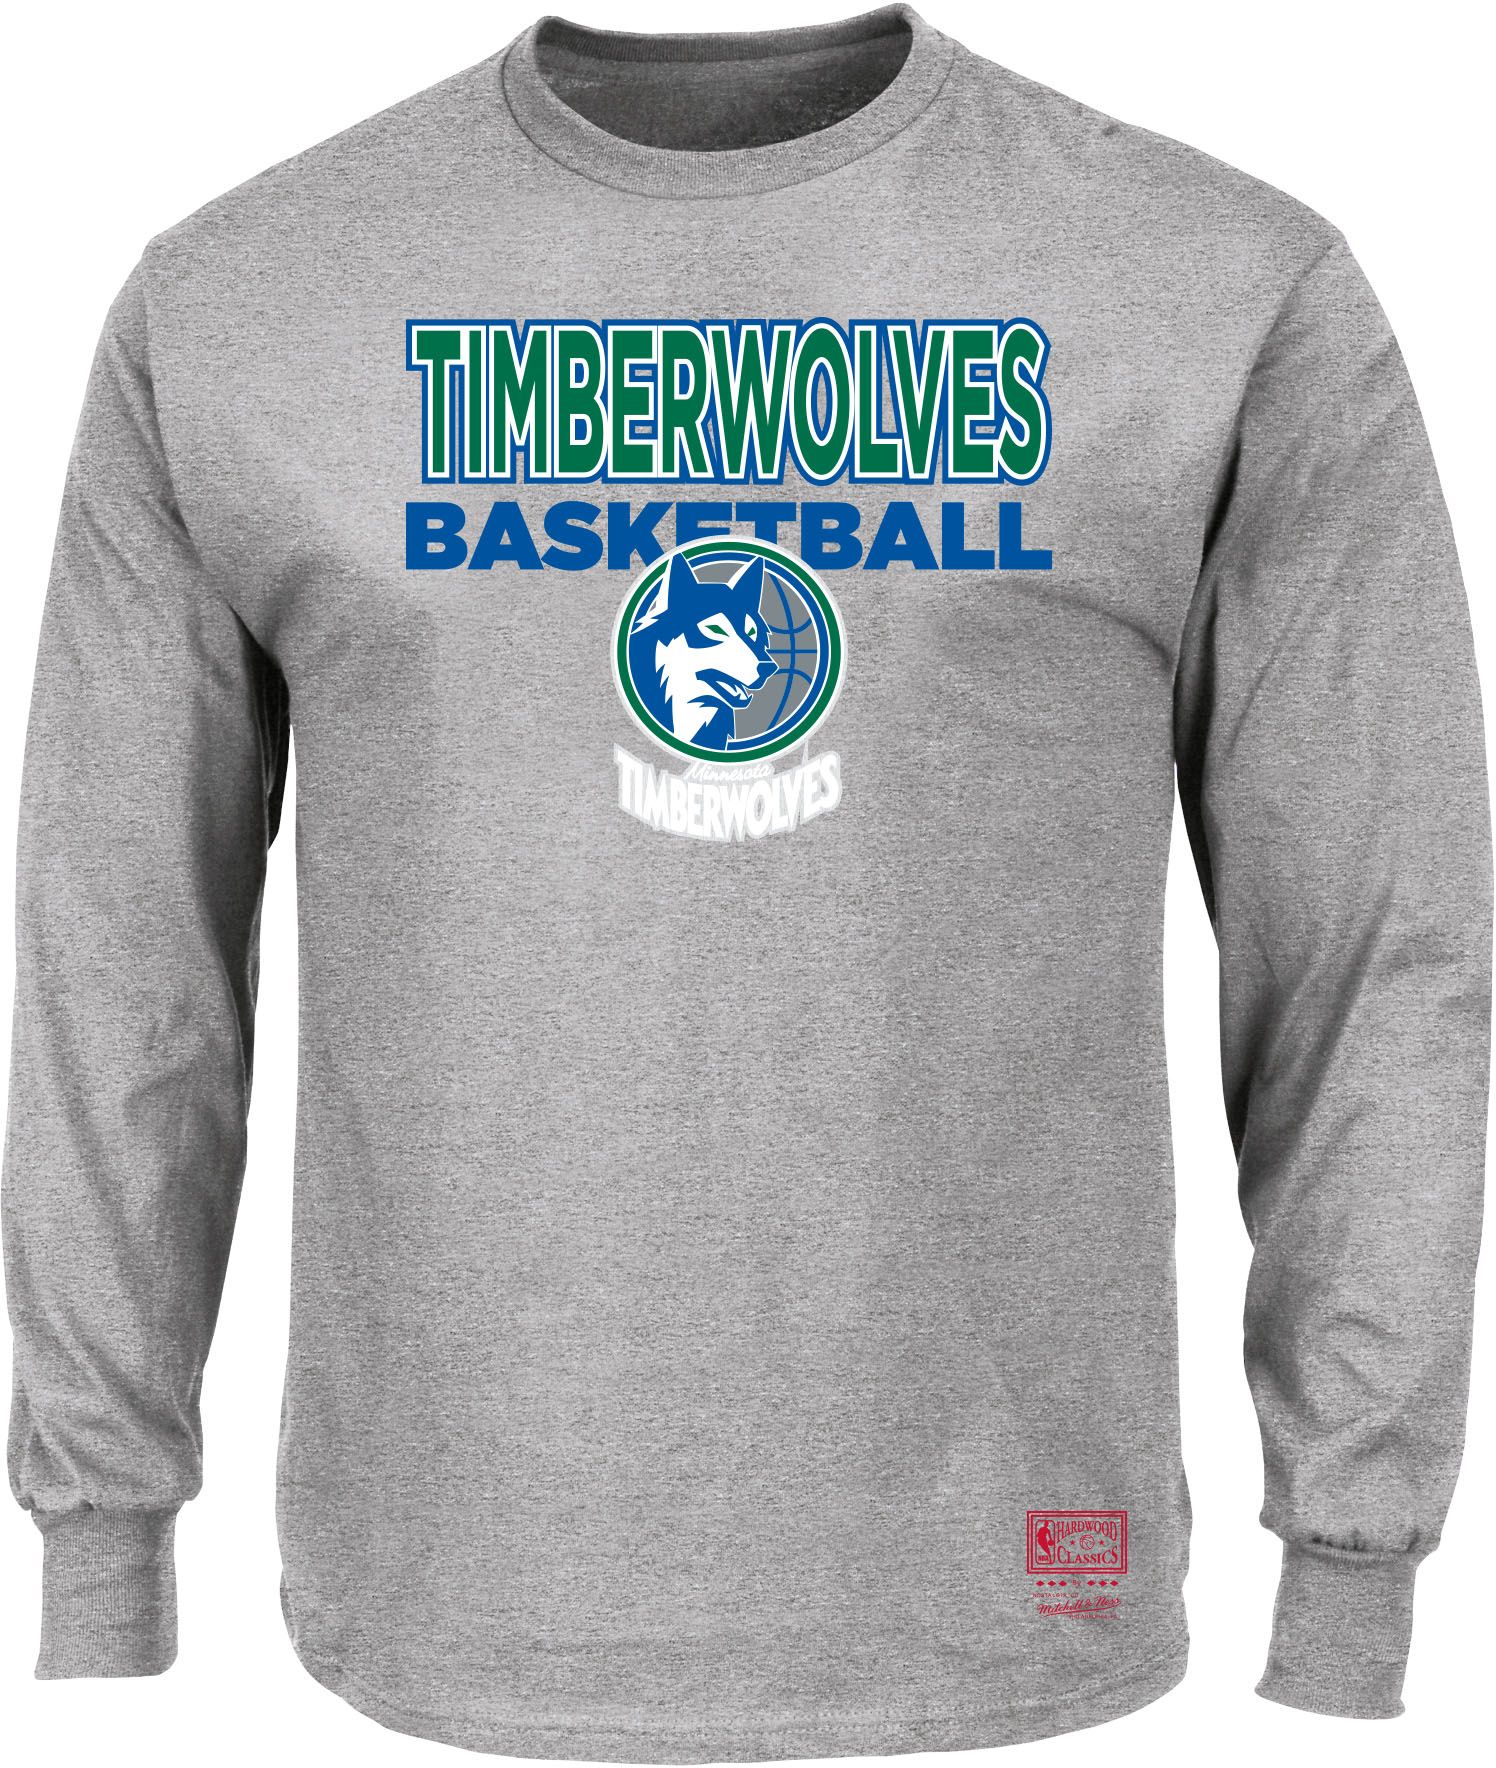 timberwolves long sleeve jersey